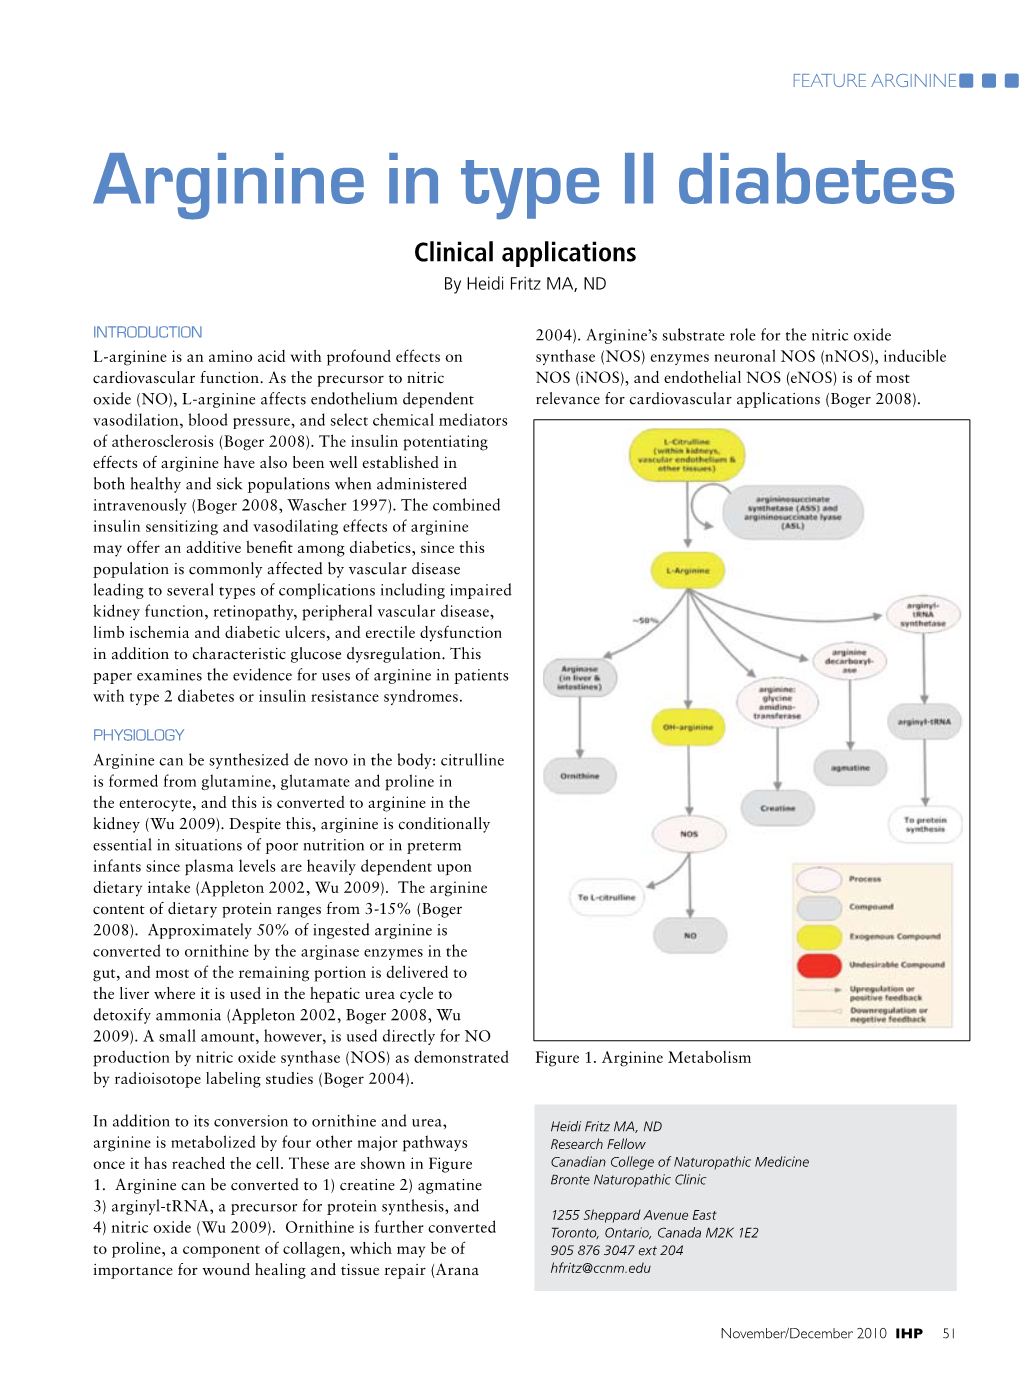 Arginine in Type II Diabetes Clinical Applications by Heidi Fritz MA, ND